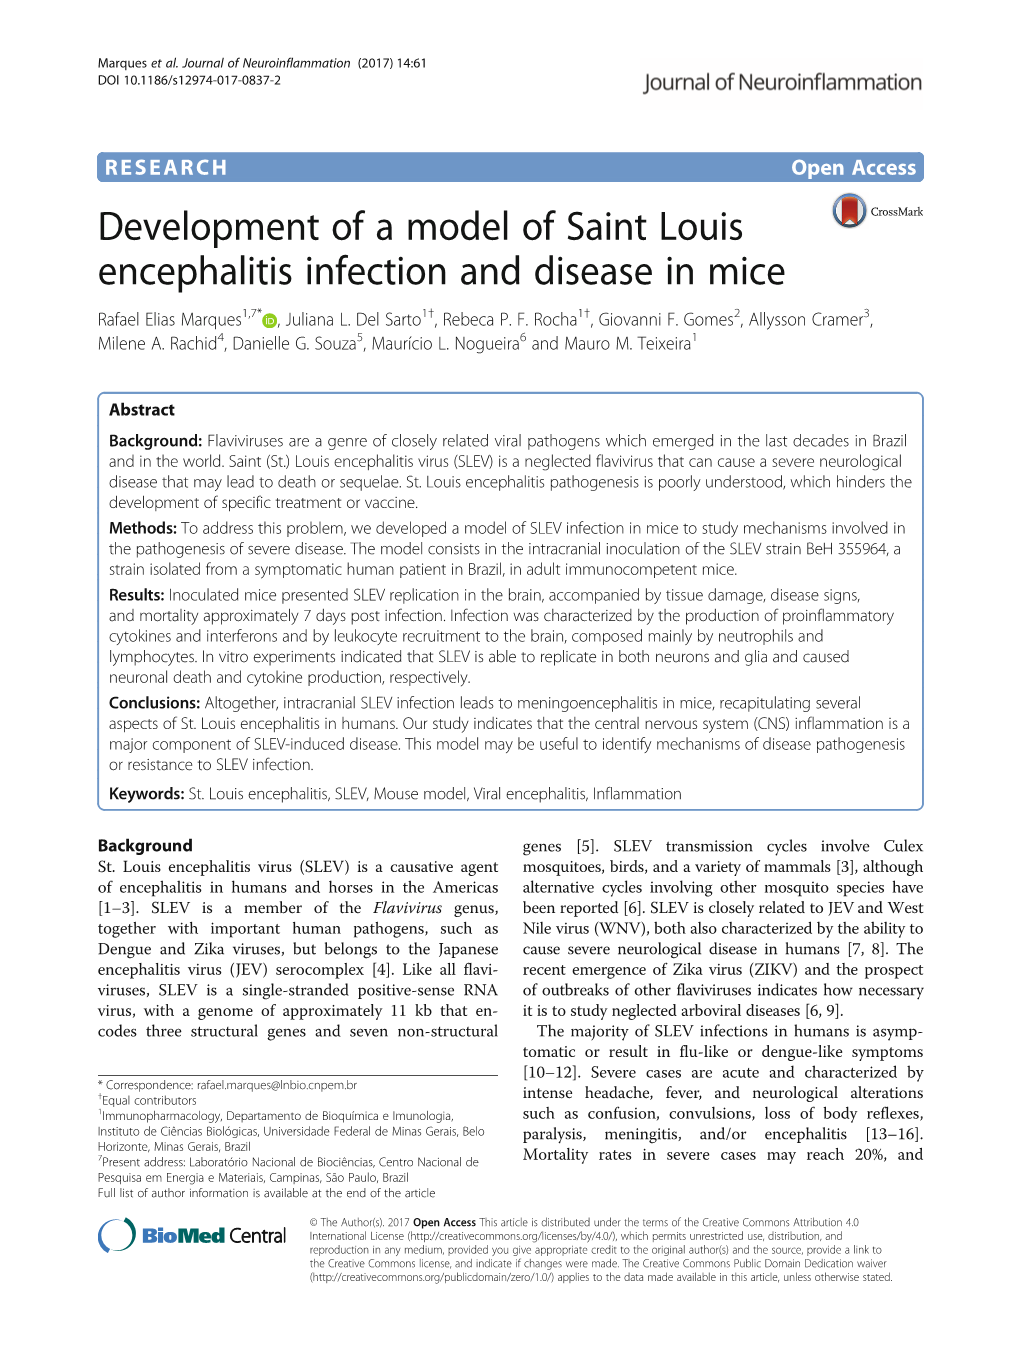 Development of a Model of Saint Louis Encephalitis Infection and Disease in Mice Rafael Elias Marques1,7* , Juliana L